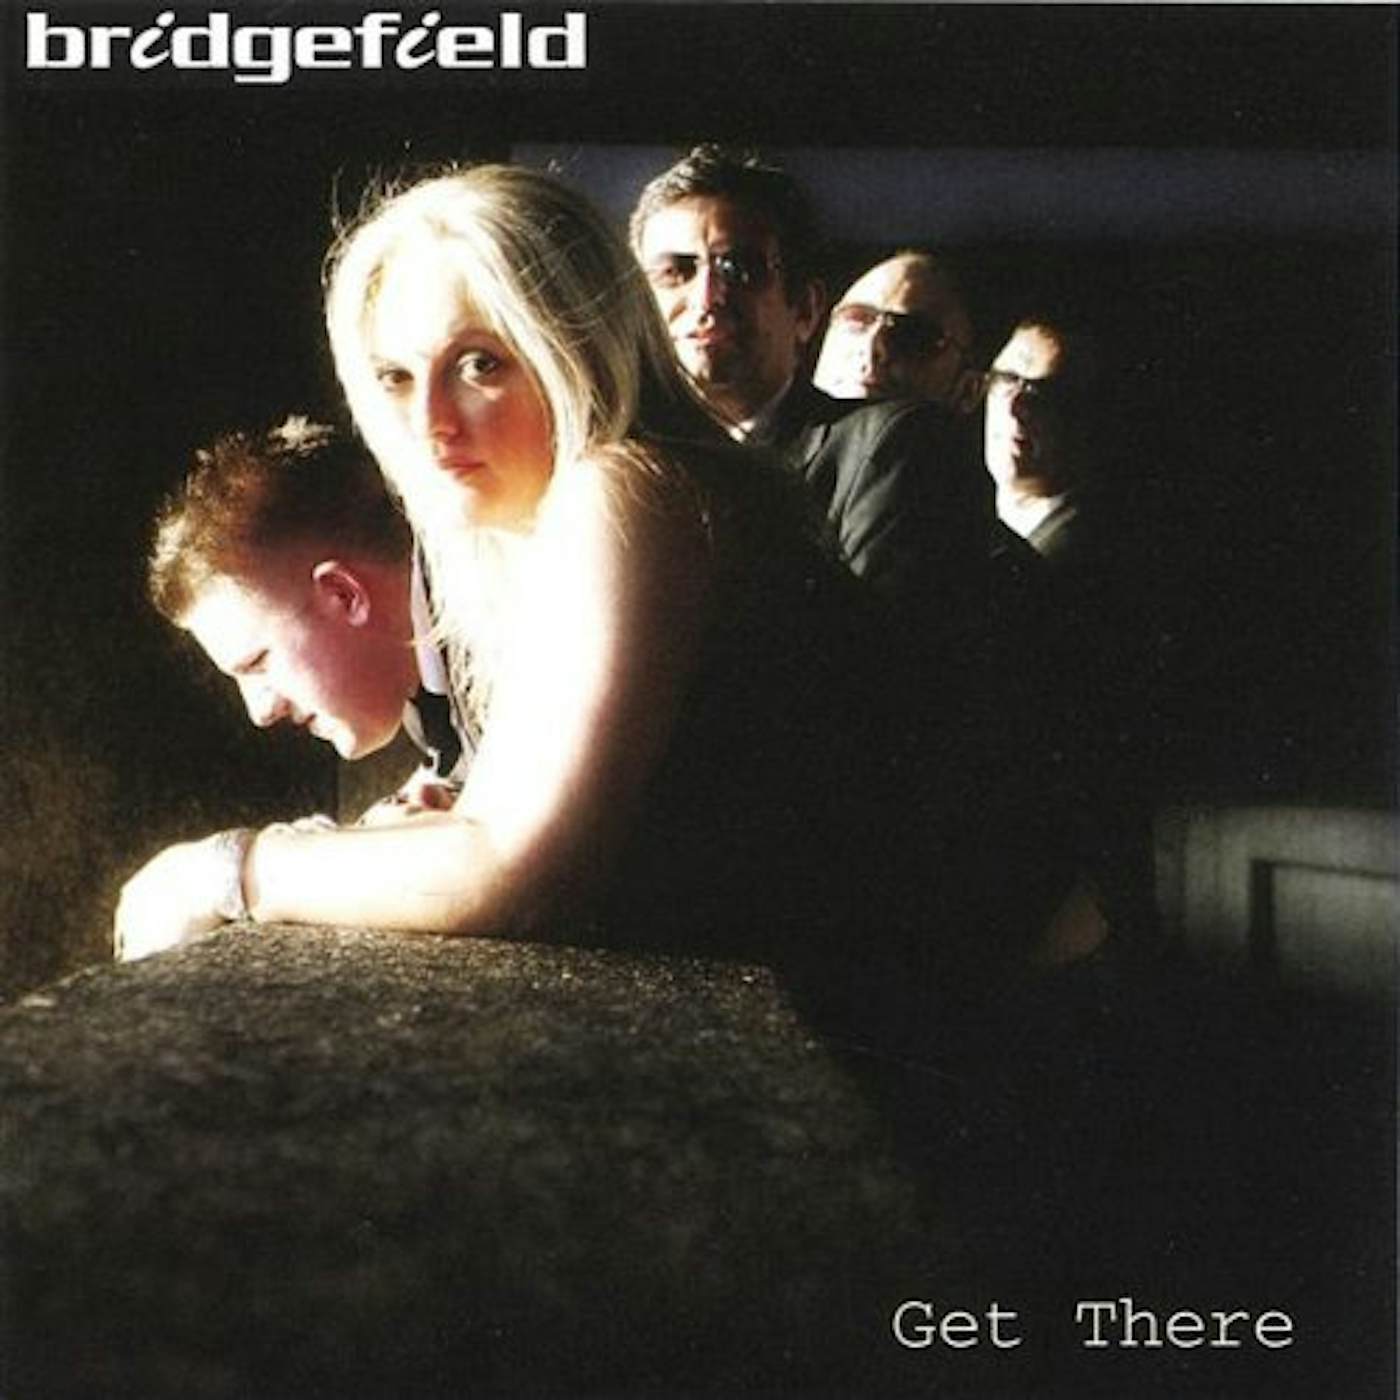 Bridgefield GET THERE CD